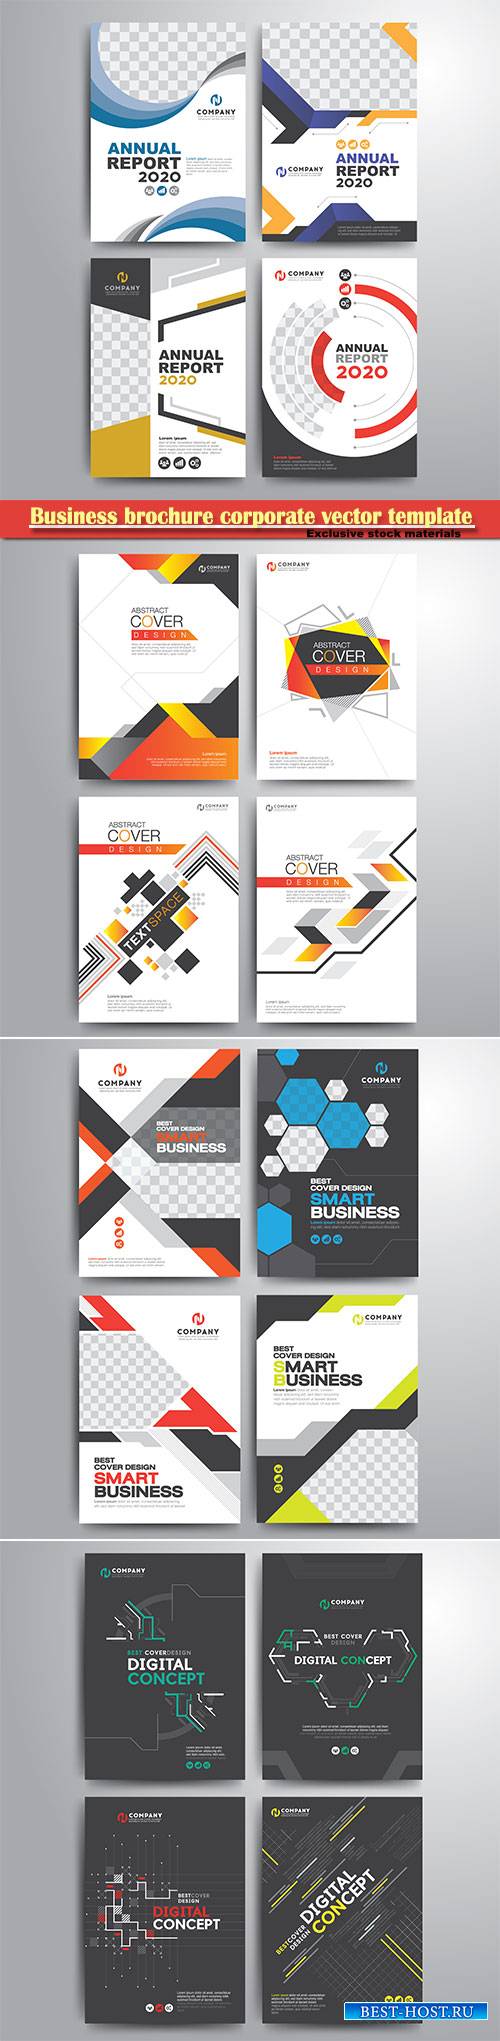 Business brochure corporate vector template, magazine flyer mockup # 10